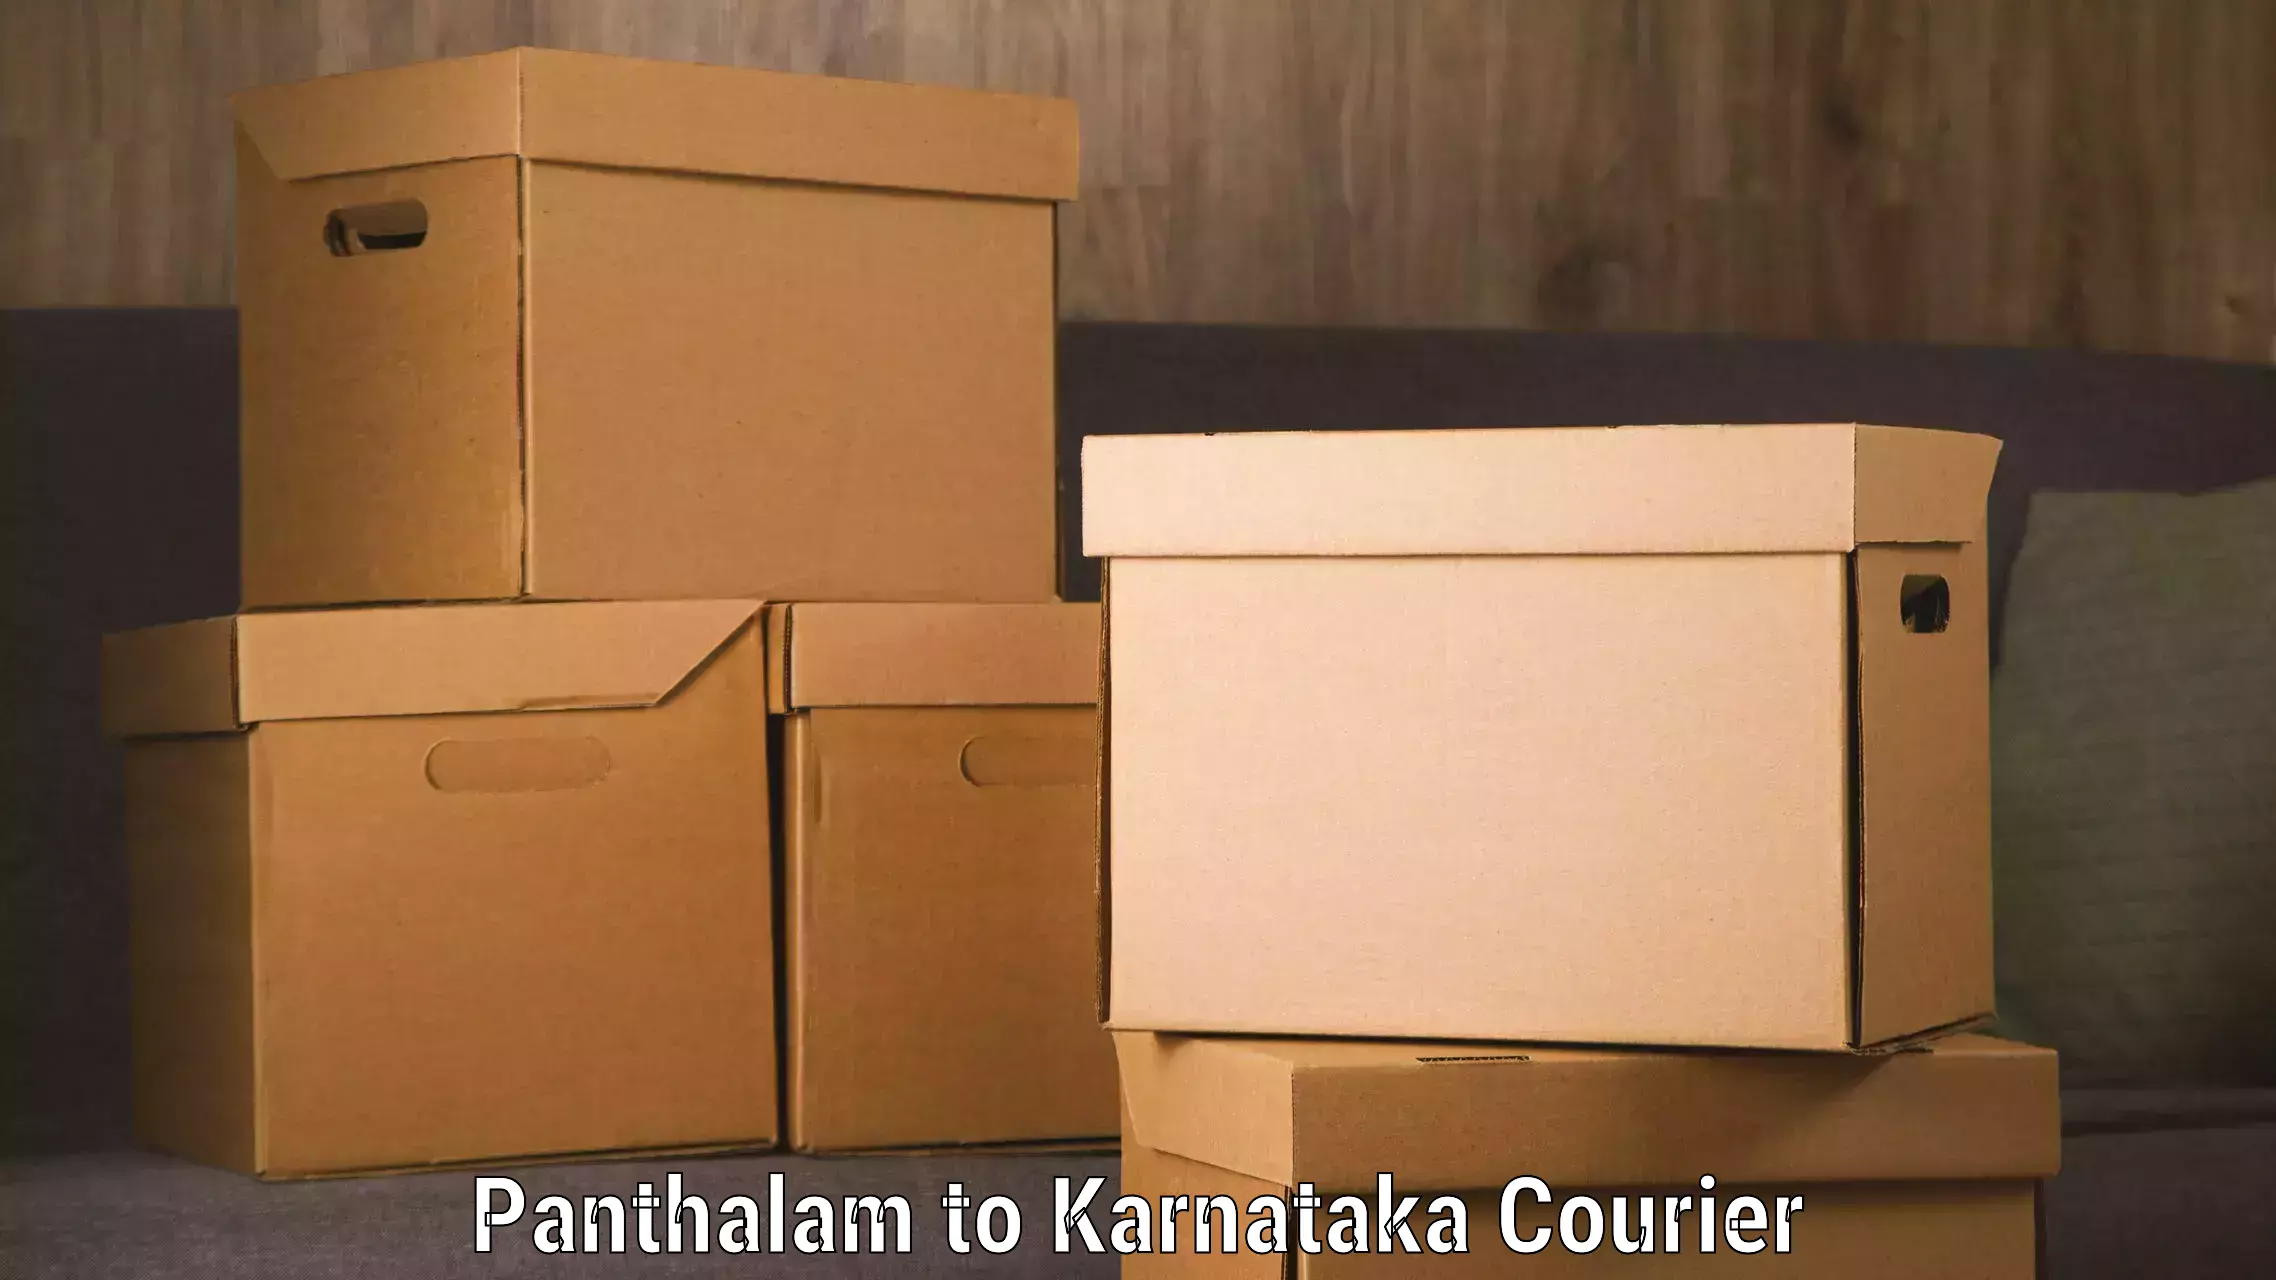 State-of-the-art courier technology Panthalam to Karnataka